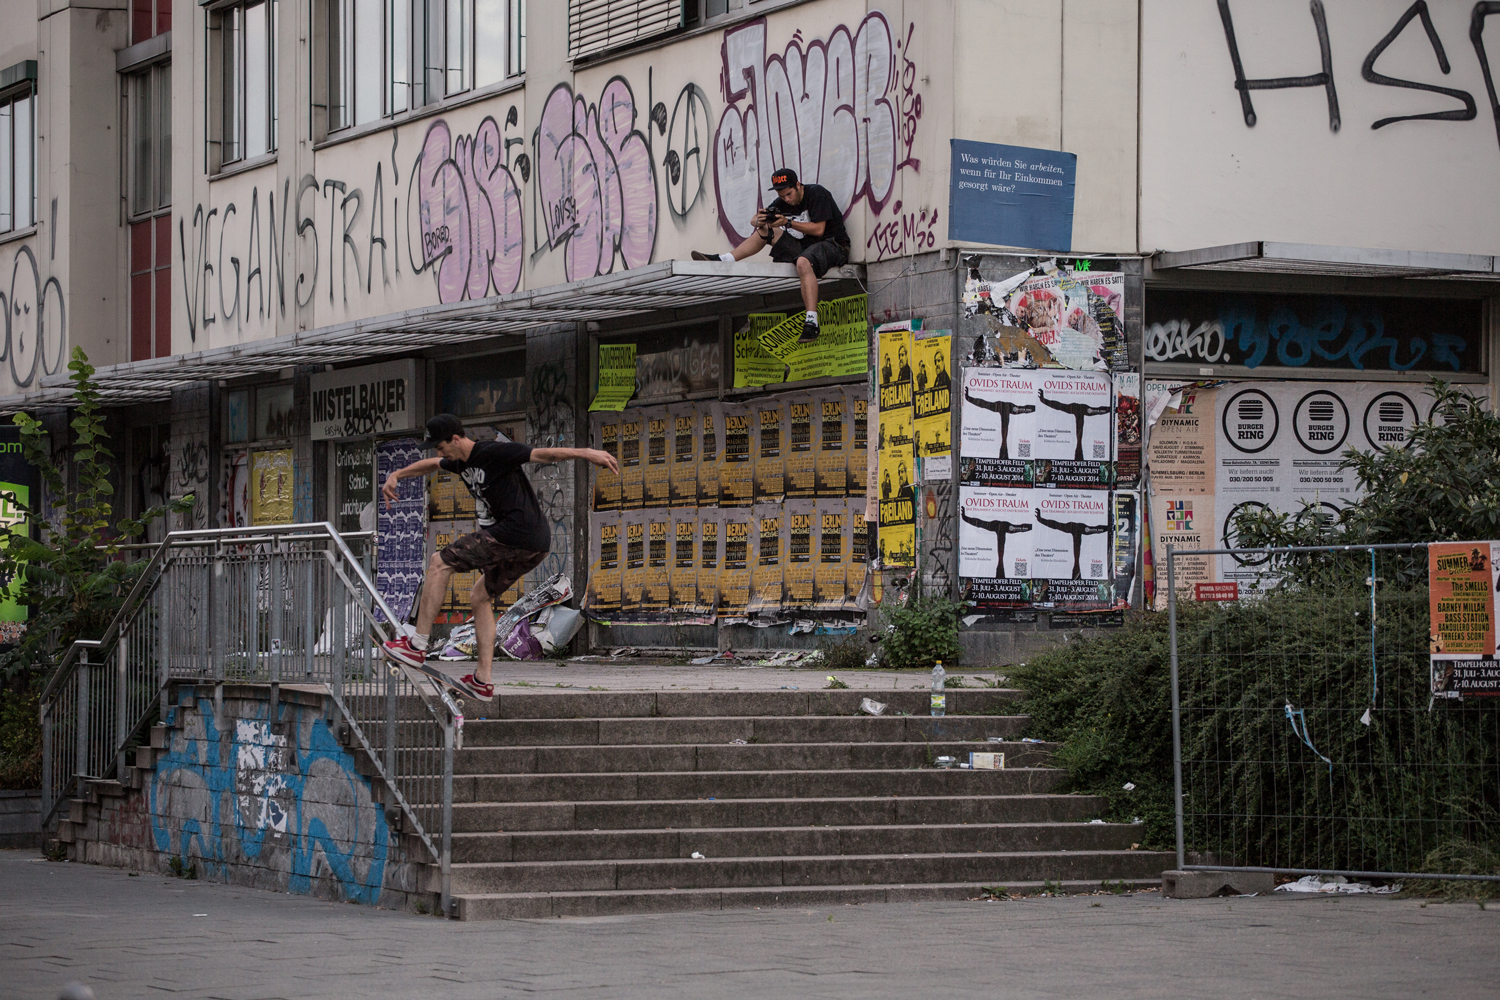 Karel Raichl frontside boardslide / foto: Radek Karkys